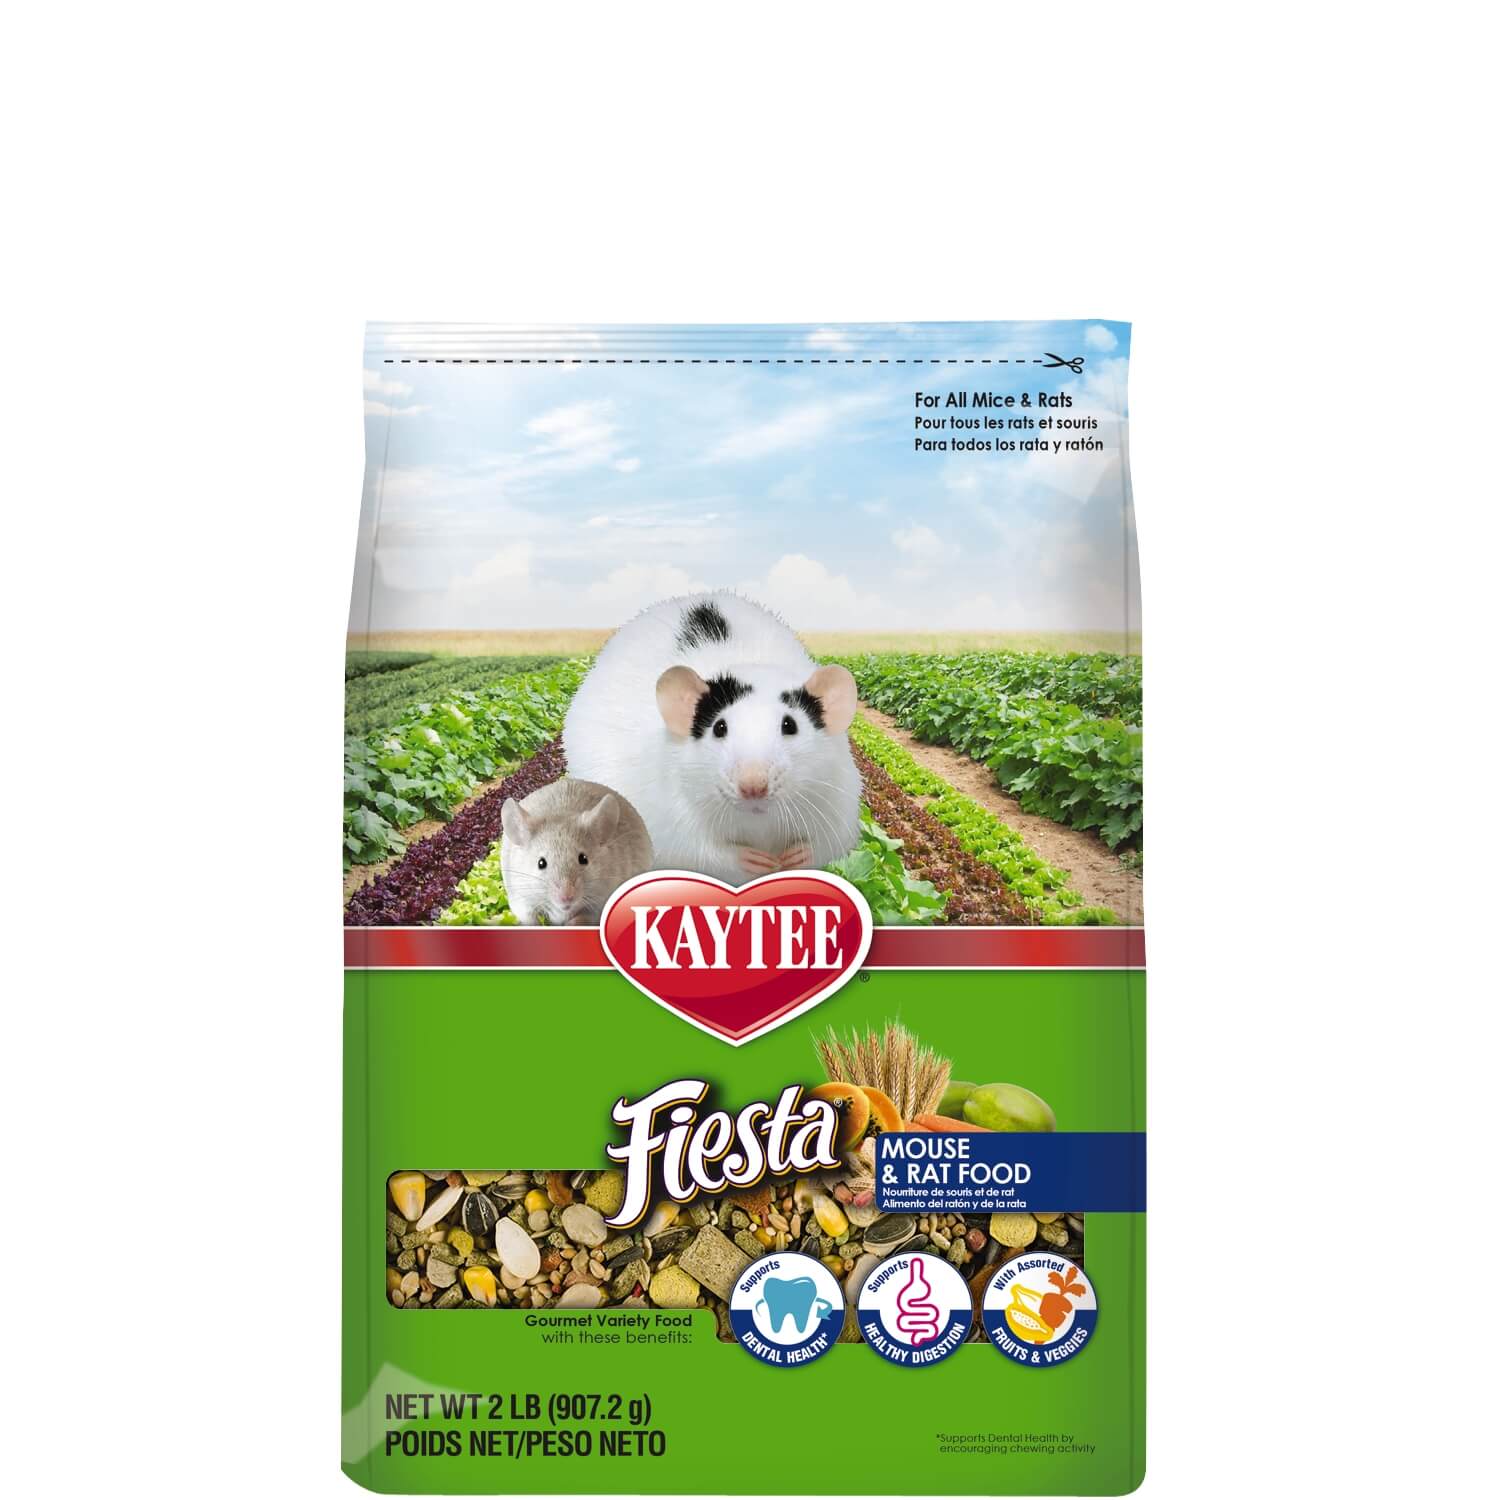 Fiesta Mouse and Rat Food : Premium Mouse & Rat Food | Kaytee